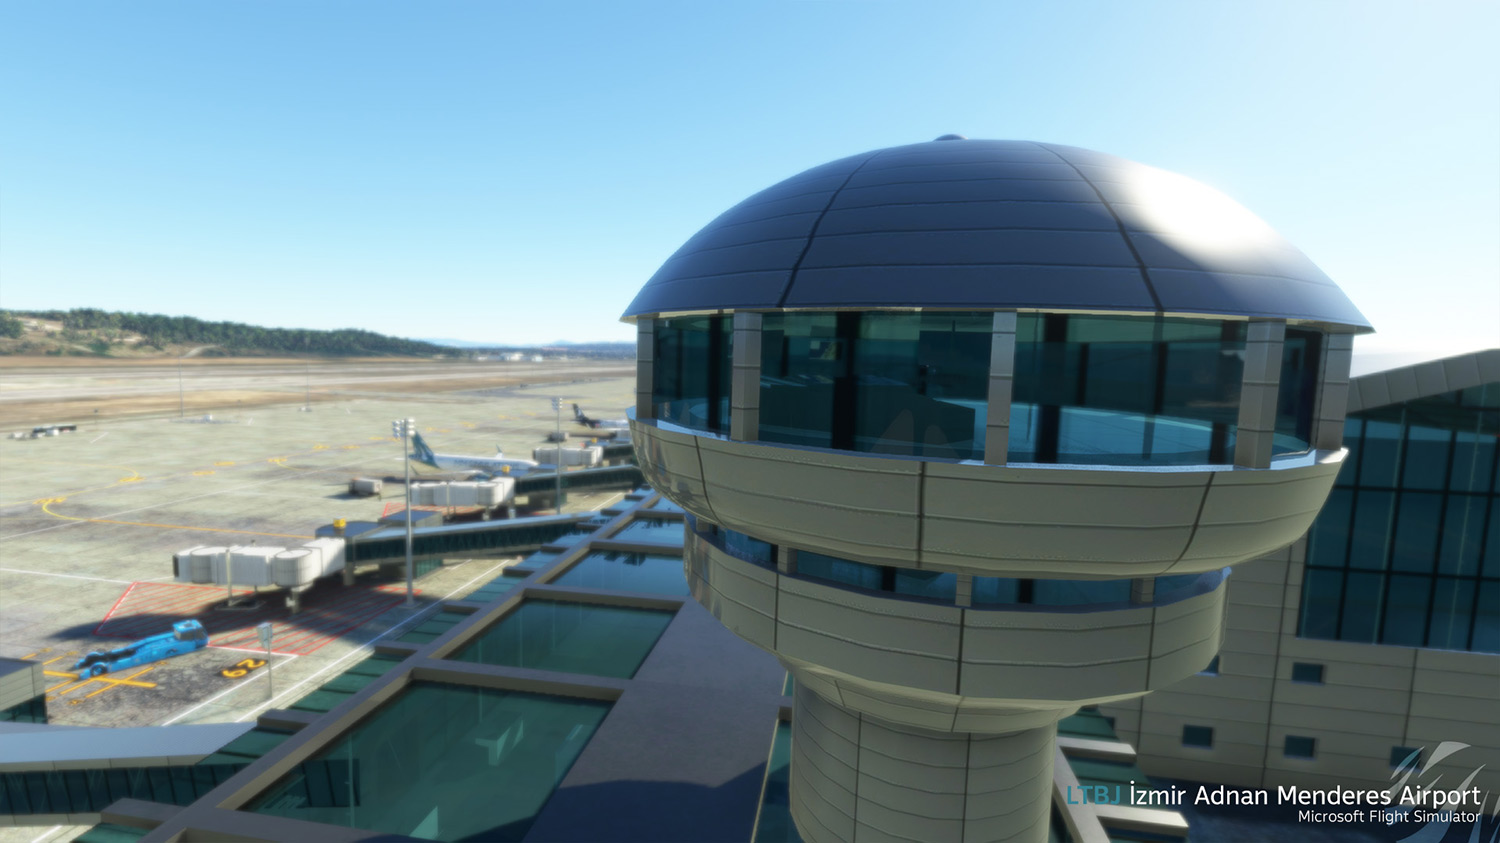 MM Simulations - LTBJ - Izmir Adnan Menderes International Airport